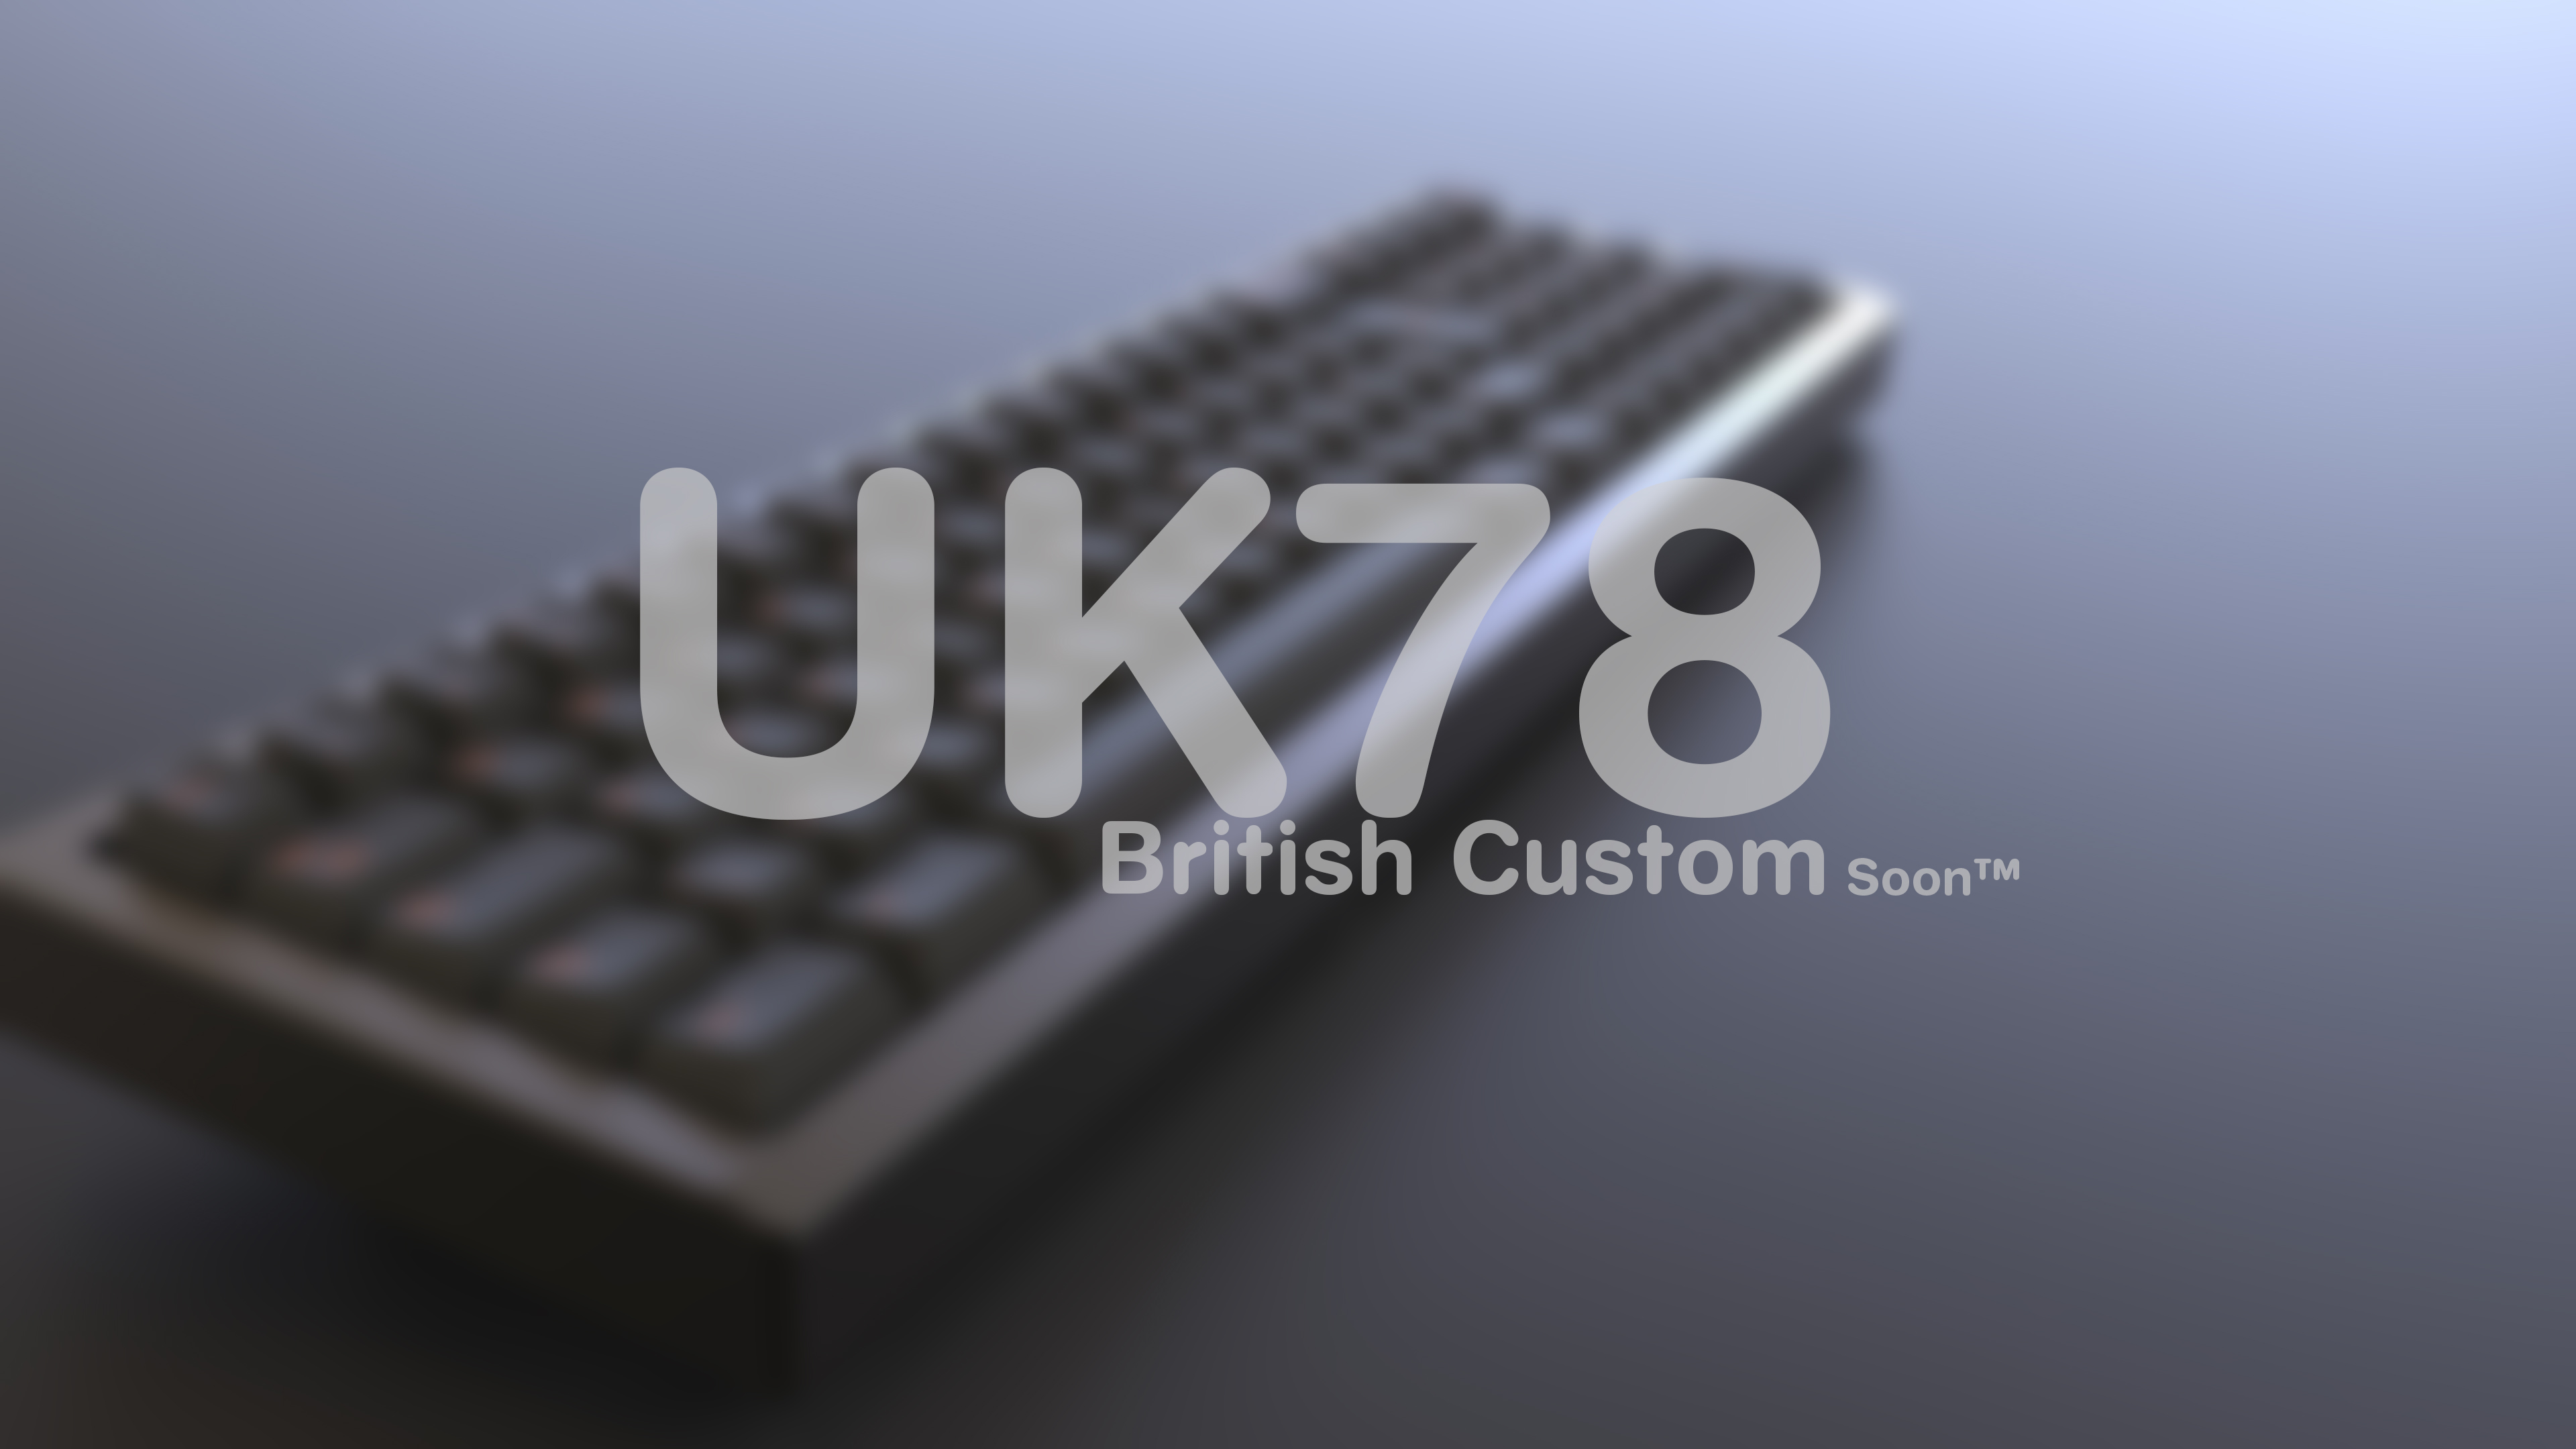 UK78 soon cover.jpg